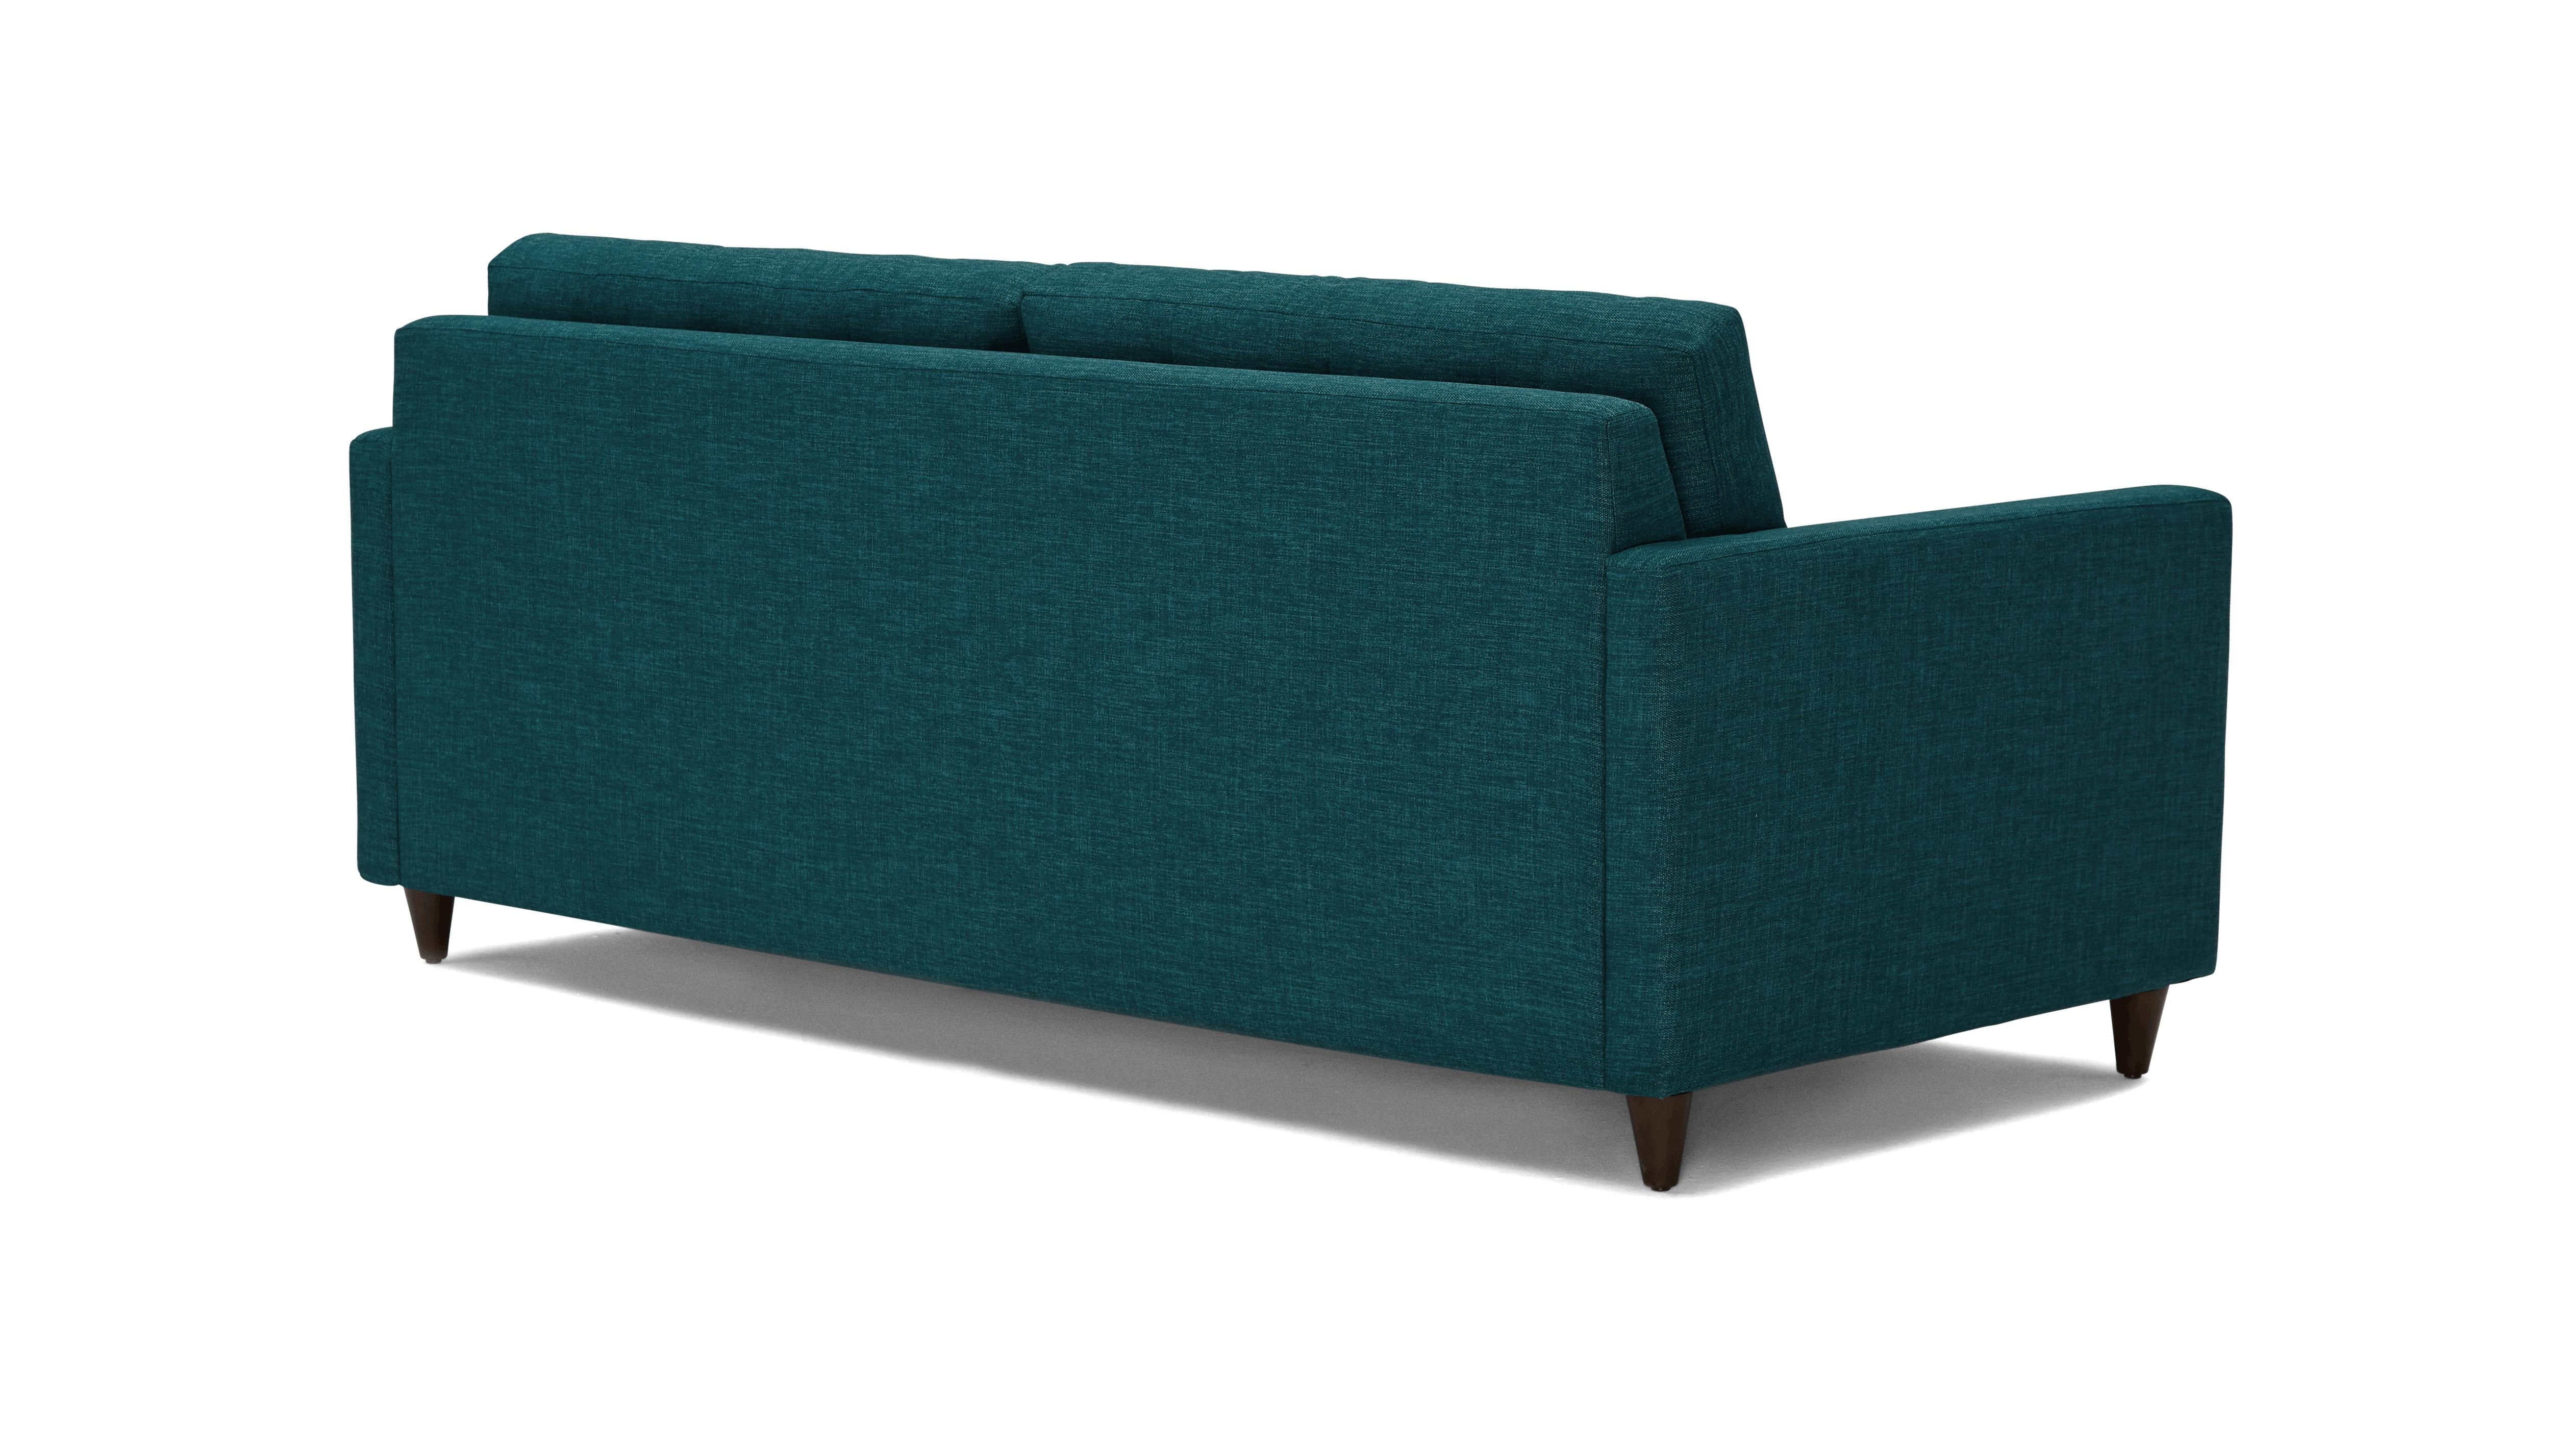 Blue Eliot Mid Century Modern Sleeper Sofa - Key Largo Zenith Teal - Mocha - Foam - Image 3